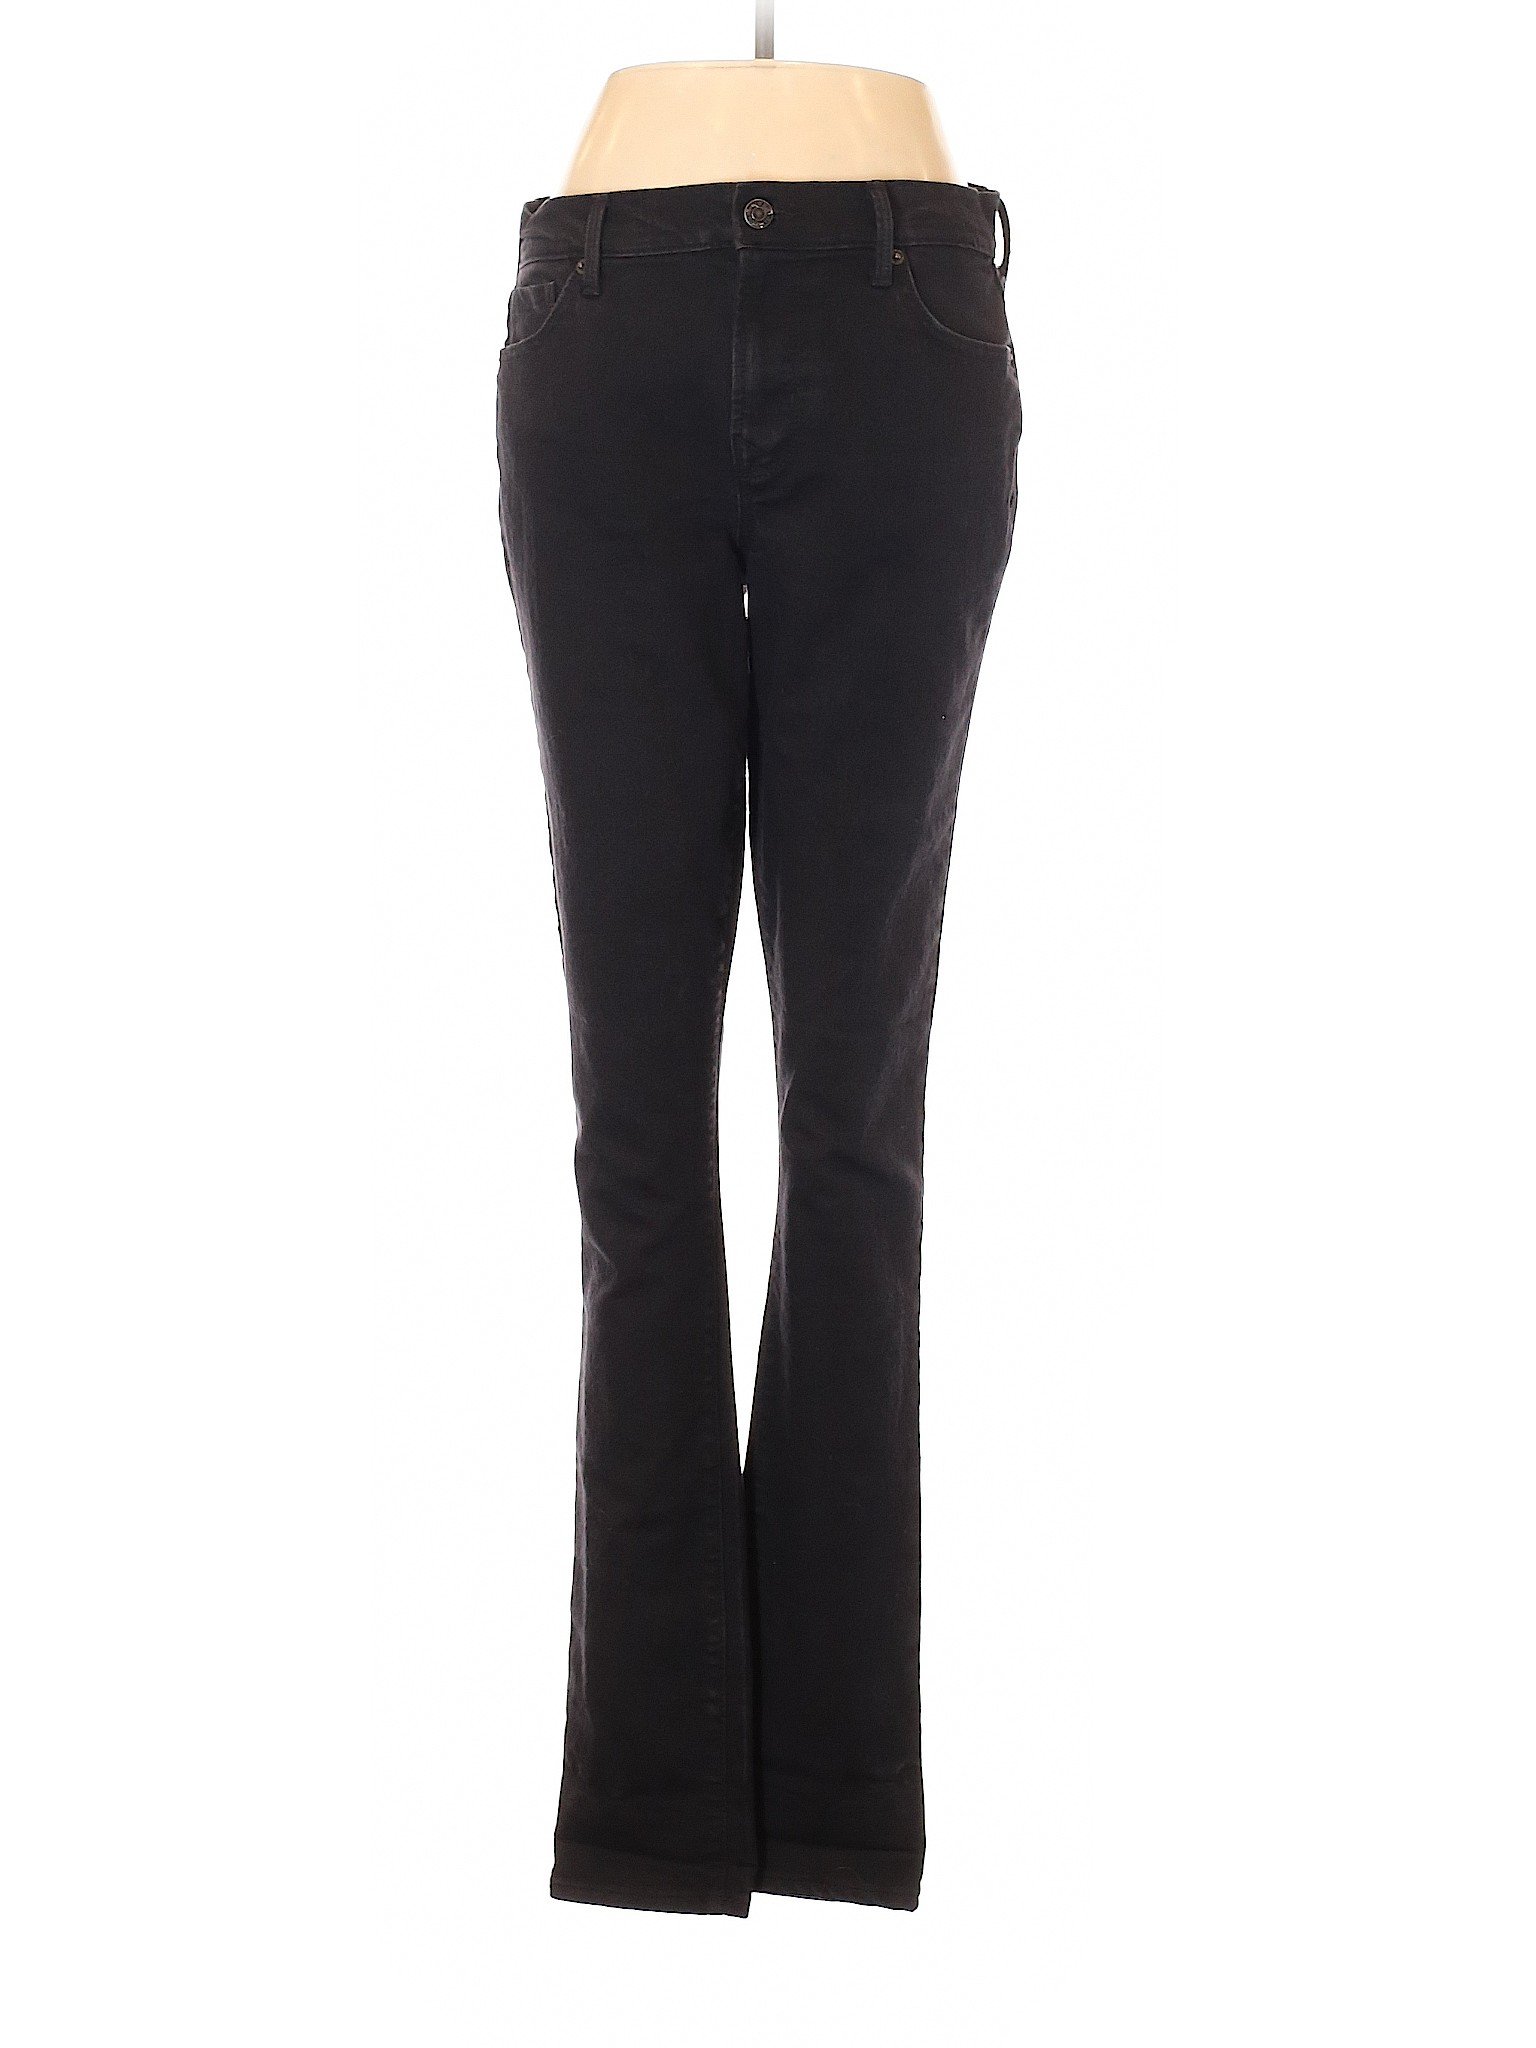 Old Navy Women Black Jeans 6 Tall | eBay